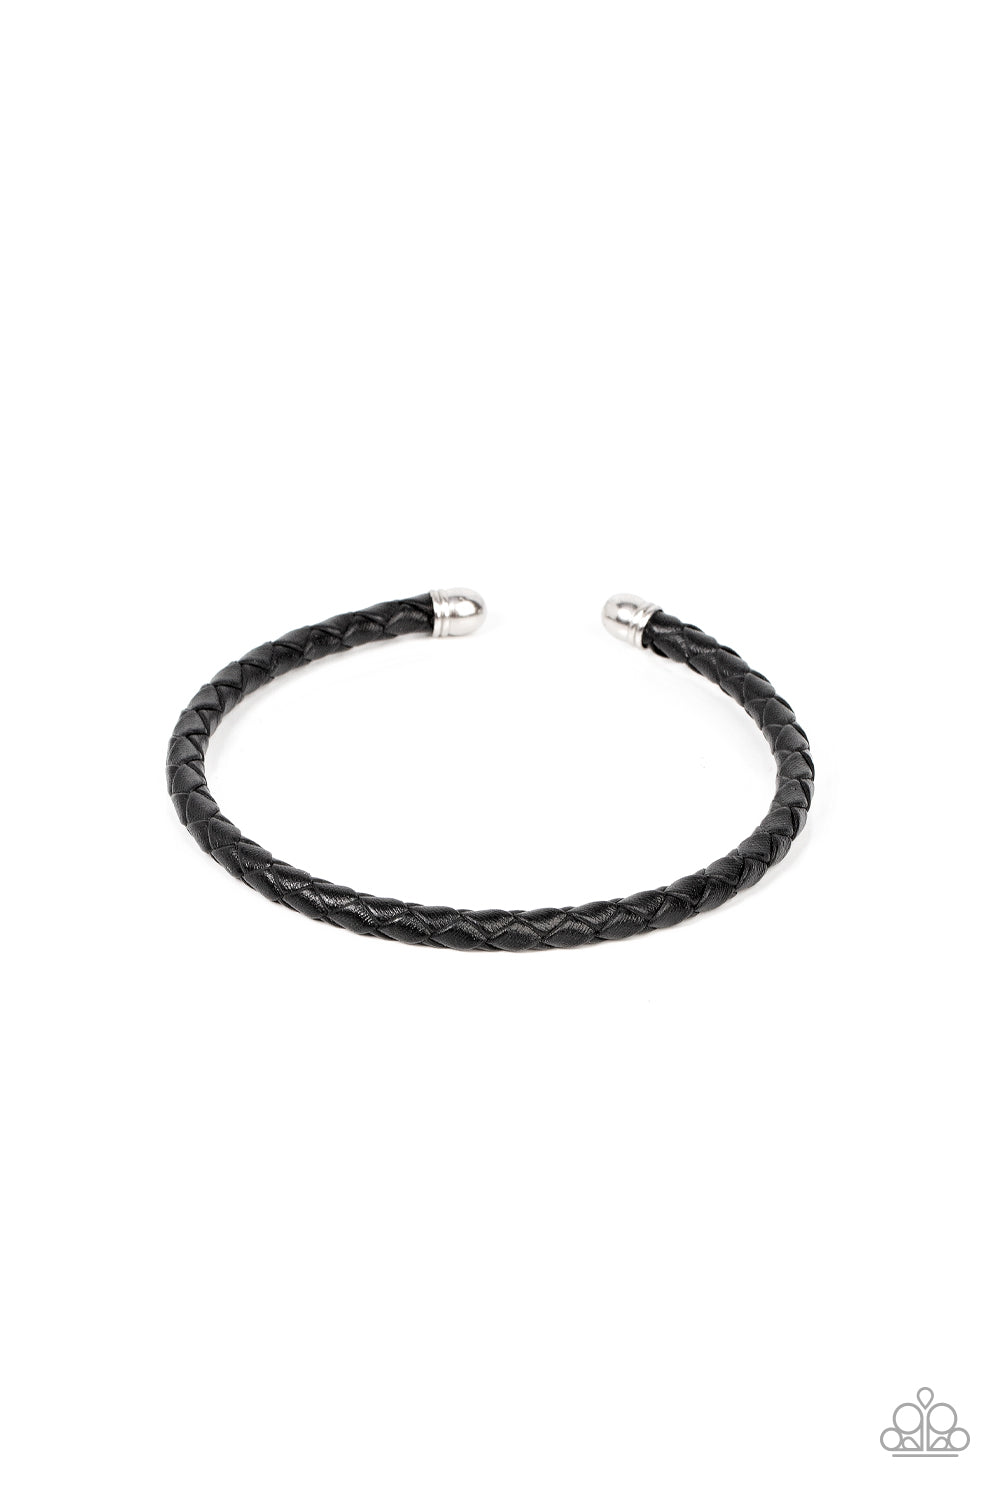 Rustic Wrangler Men&#39;s Black Leather Cuff Bracelet - Paparazzi Accessories- lightbox - CarasShop.com - $5 Jewelry by Cara Jewels